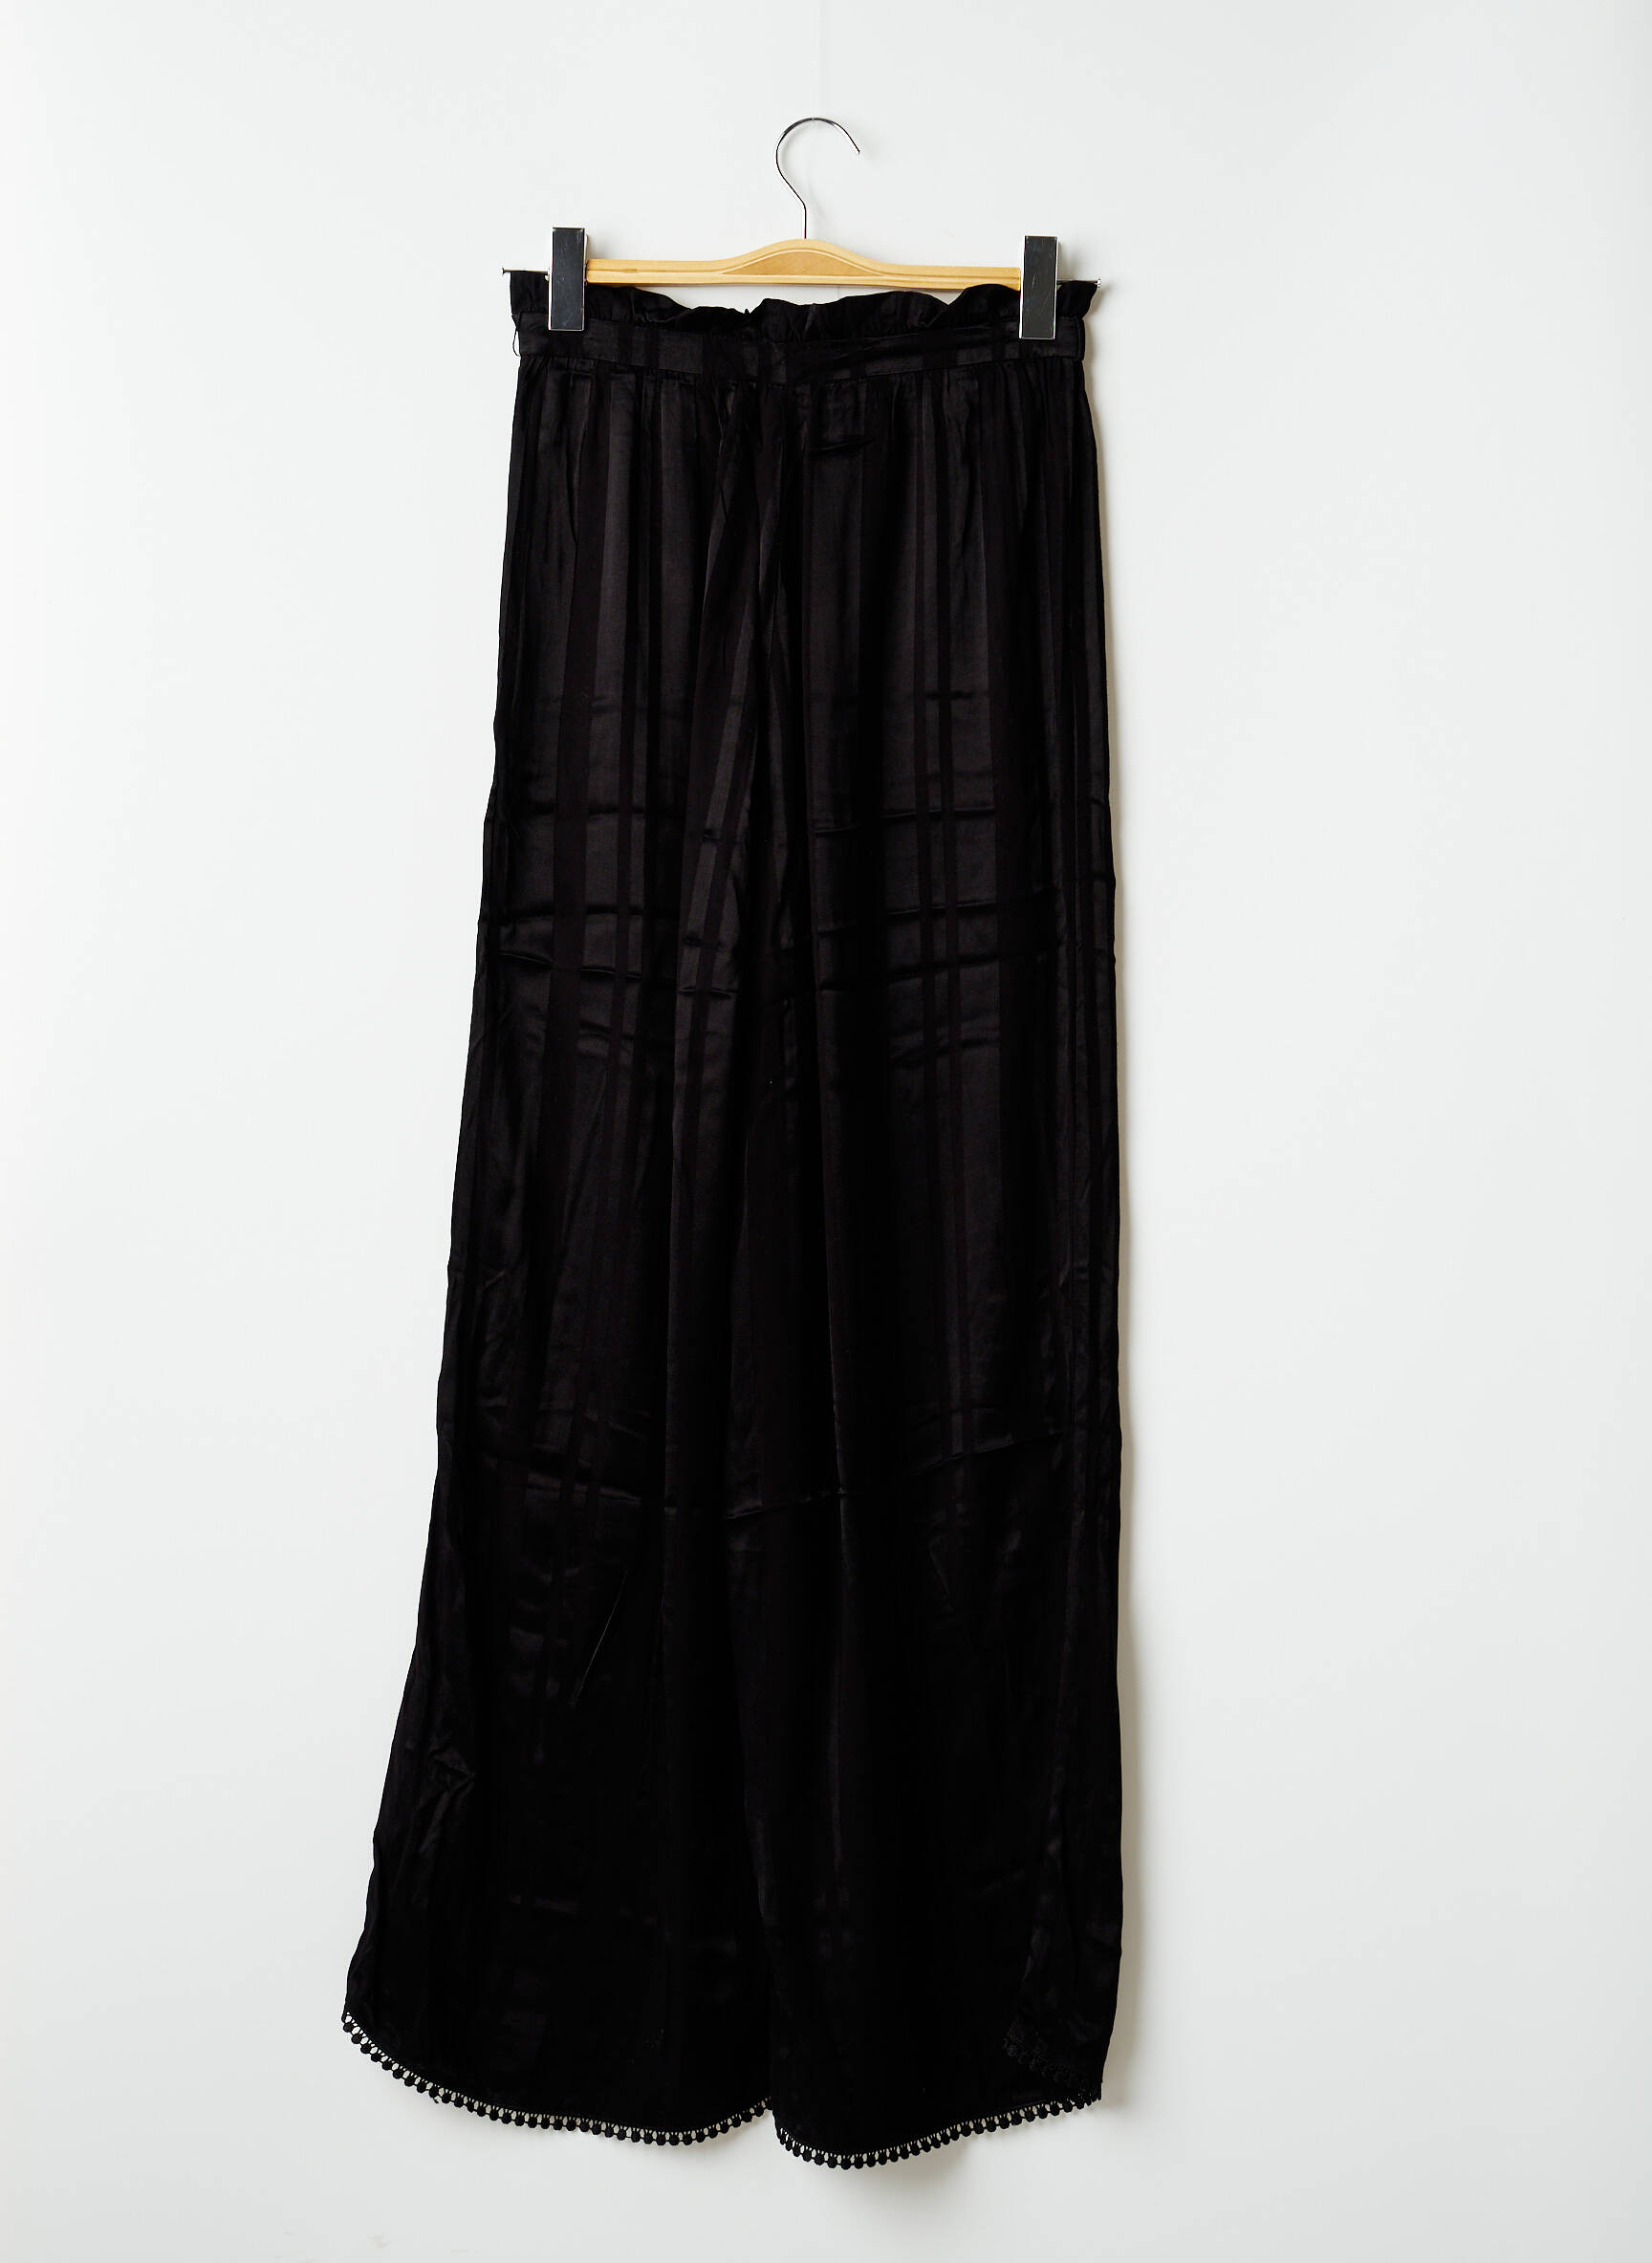 Pantalon femme Zara taille 42 noir - Zara